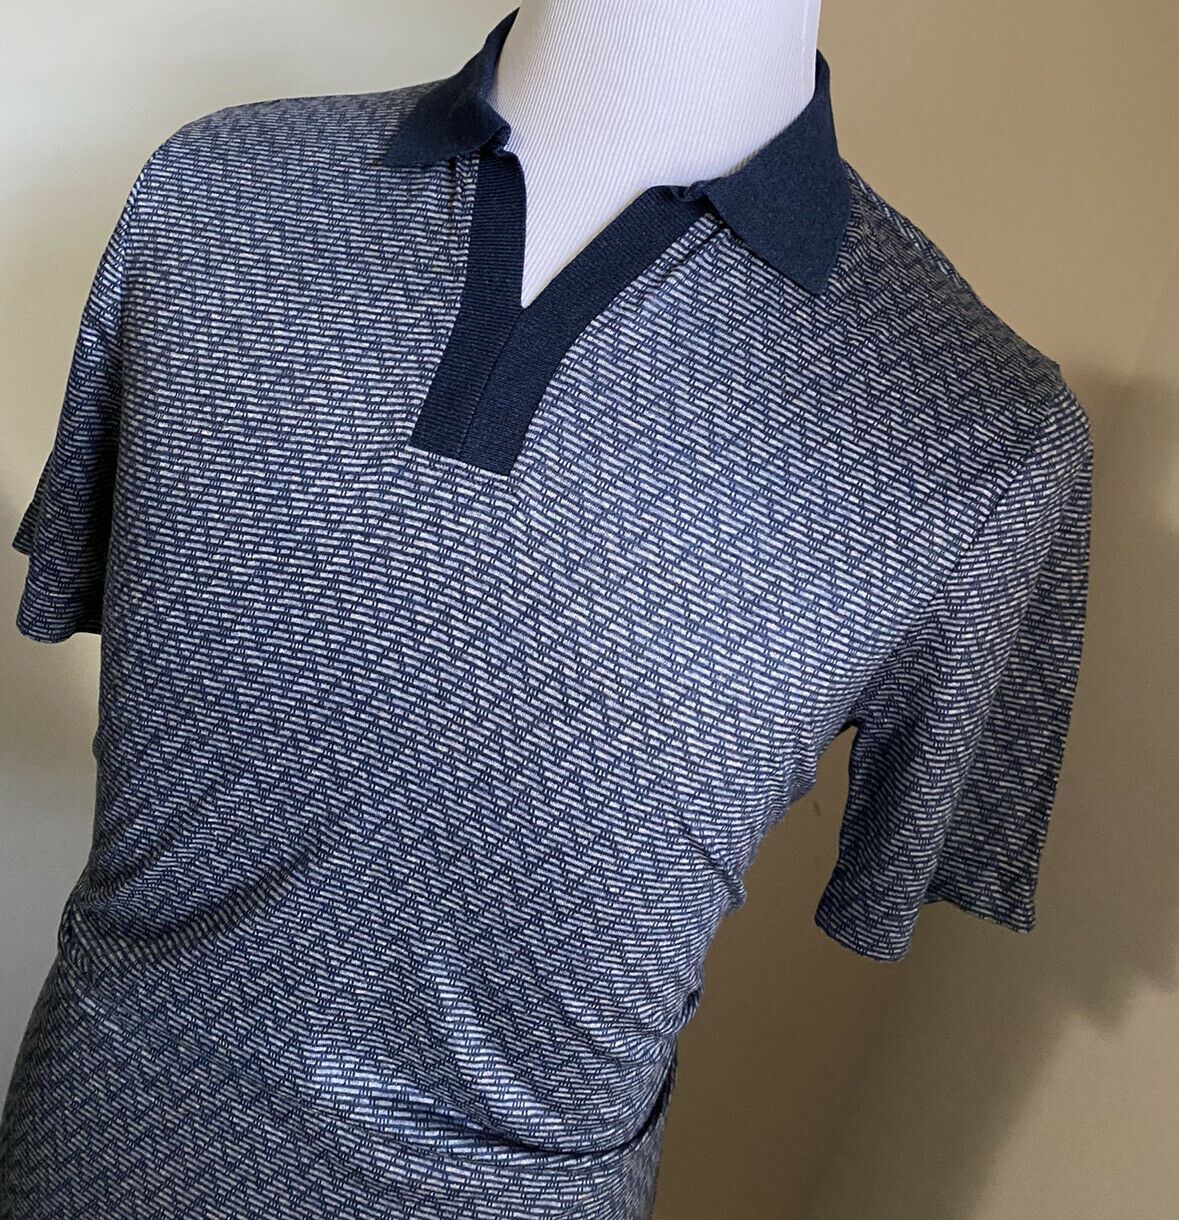 NWT $745 Мужская рубашка поло Giorgio Armani синяя L США (52 евро) Италия